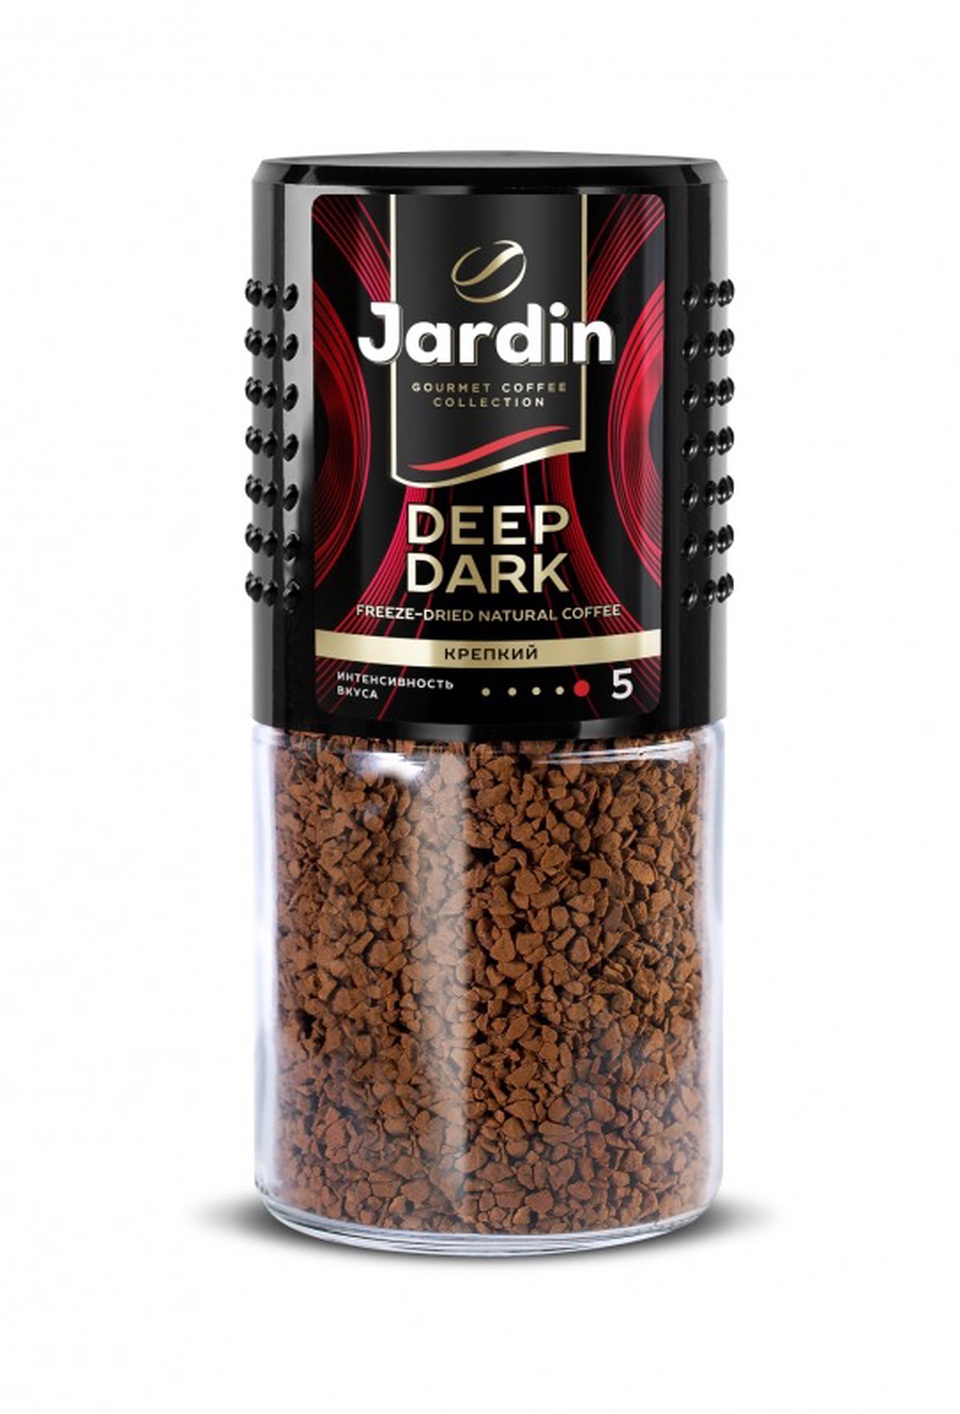 Кофе Jardin DEEP DARK ст/б 95г - 180,89 ₽, заказать онлайн.